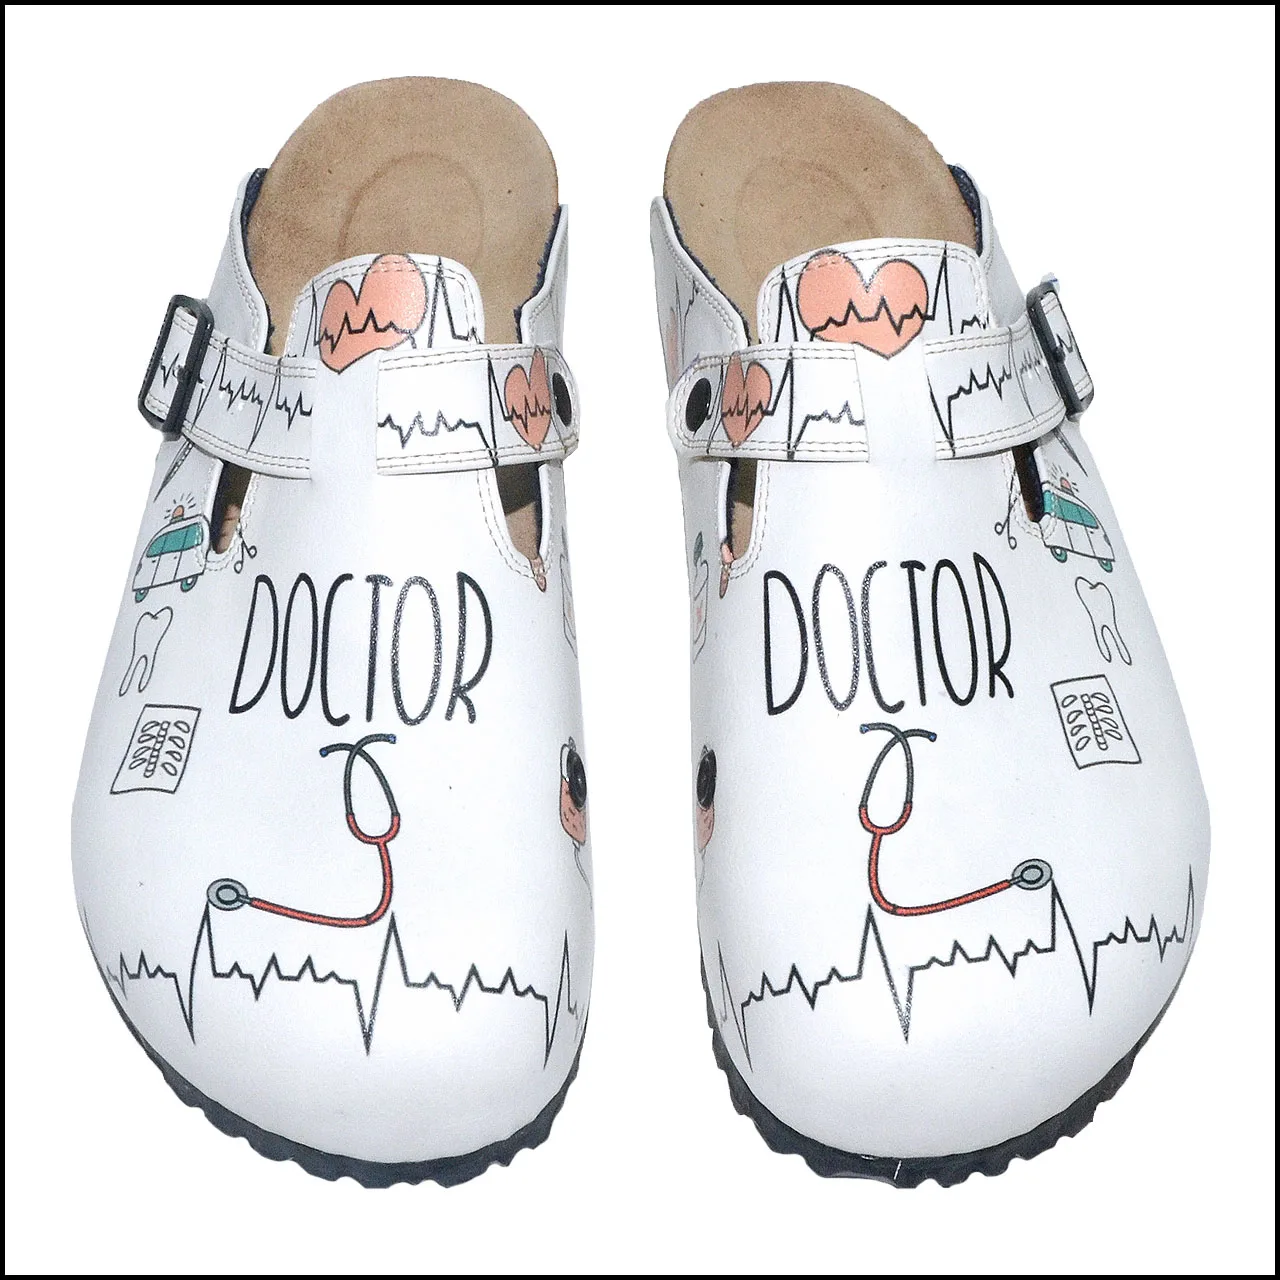 

New Orthopedic Sabo Comfortable Shoes For Women 2021 Slippers Eva Soft Sole Sandals Anti-slip Heels Medical Clog